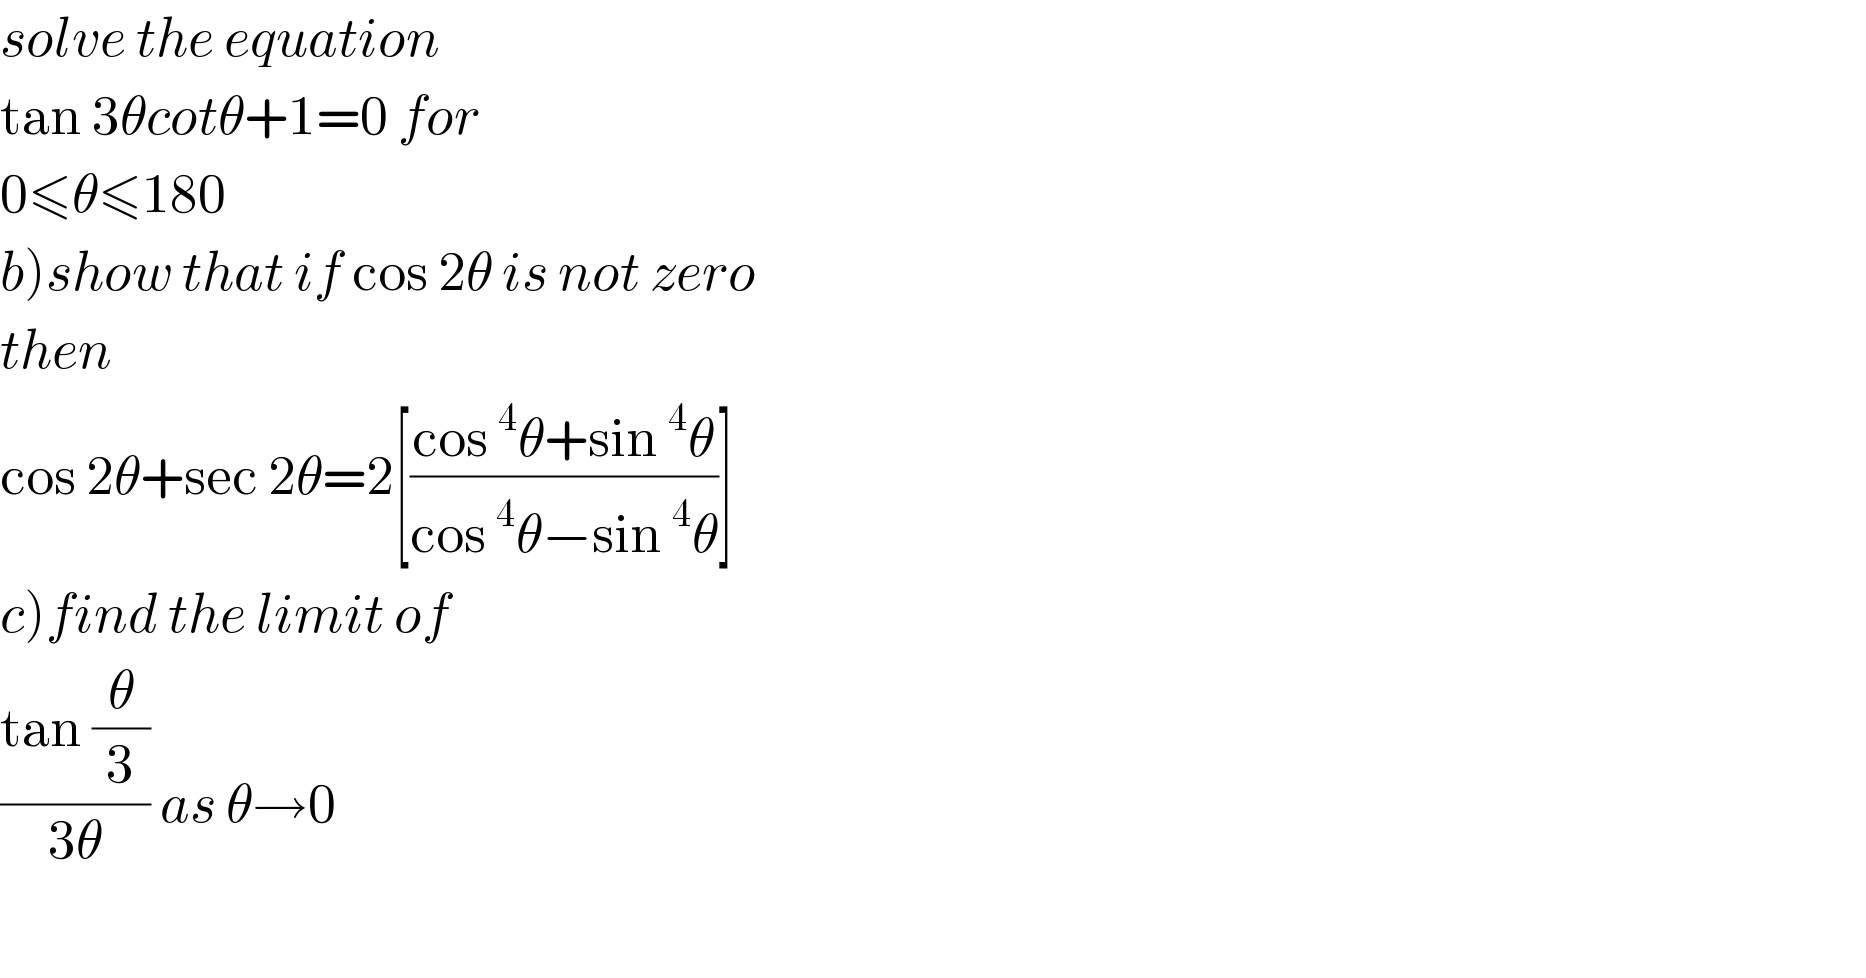 solve the equation  tan 3θcotθ+1=0 for  0≤θ≤180  b)show that if cos 2θ is not zero  then  cos 2θ+sec 2θ=2[((cos^4 θ+sin^4 θ)/(cos^4 θ−sin^4 θ))]  c)find the limit of  ((tan (θ/3))/(3θ)) as θ→0    